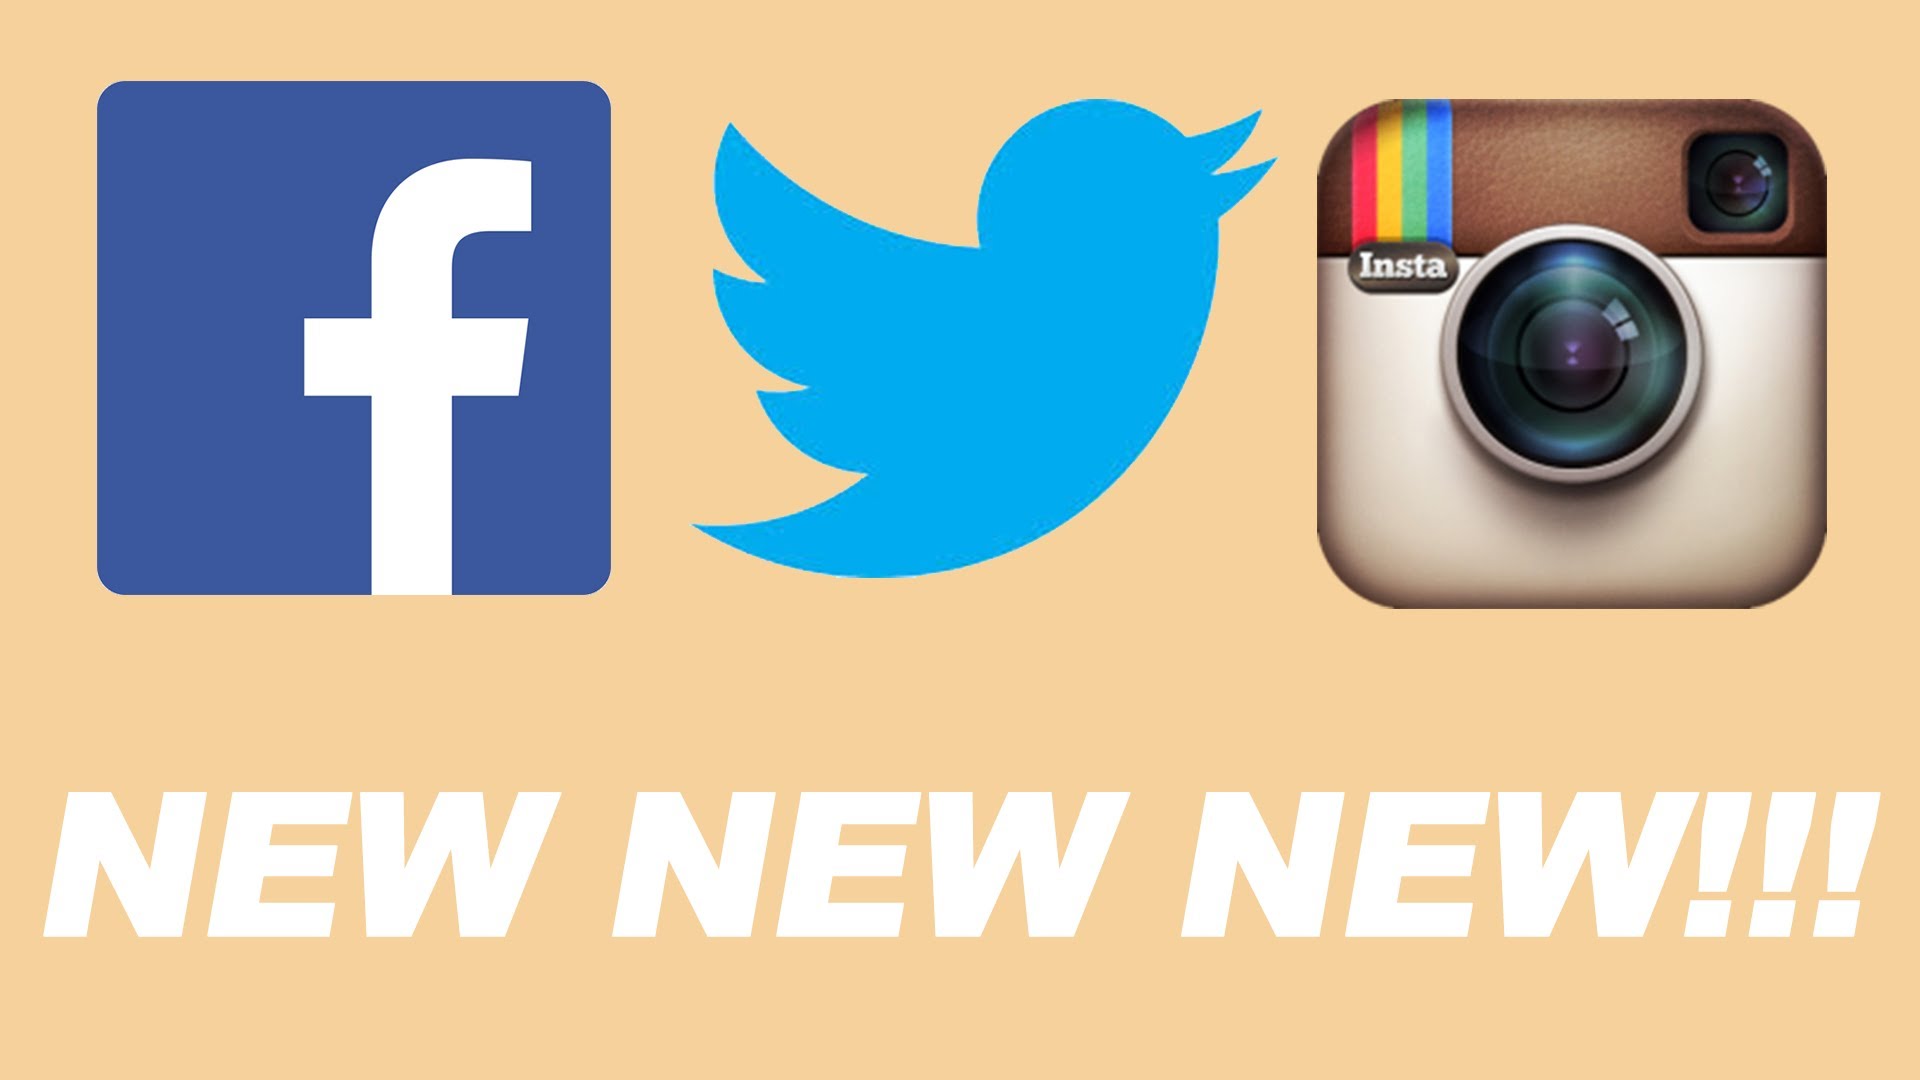 Facebook Twitter Instagram Logos